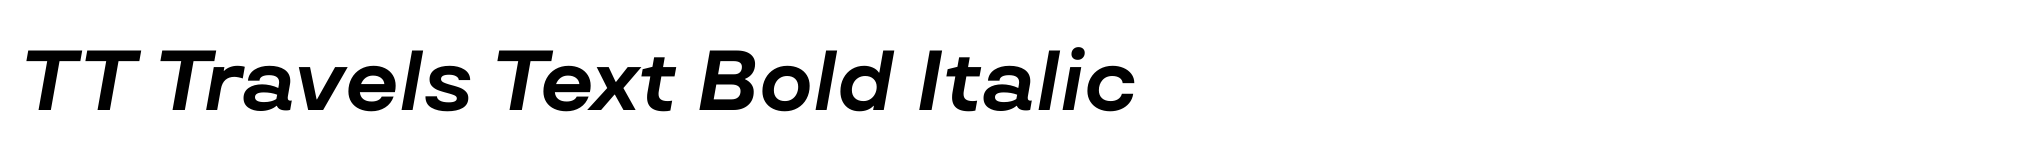 TT Travels Text Bold Italic image